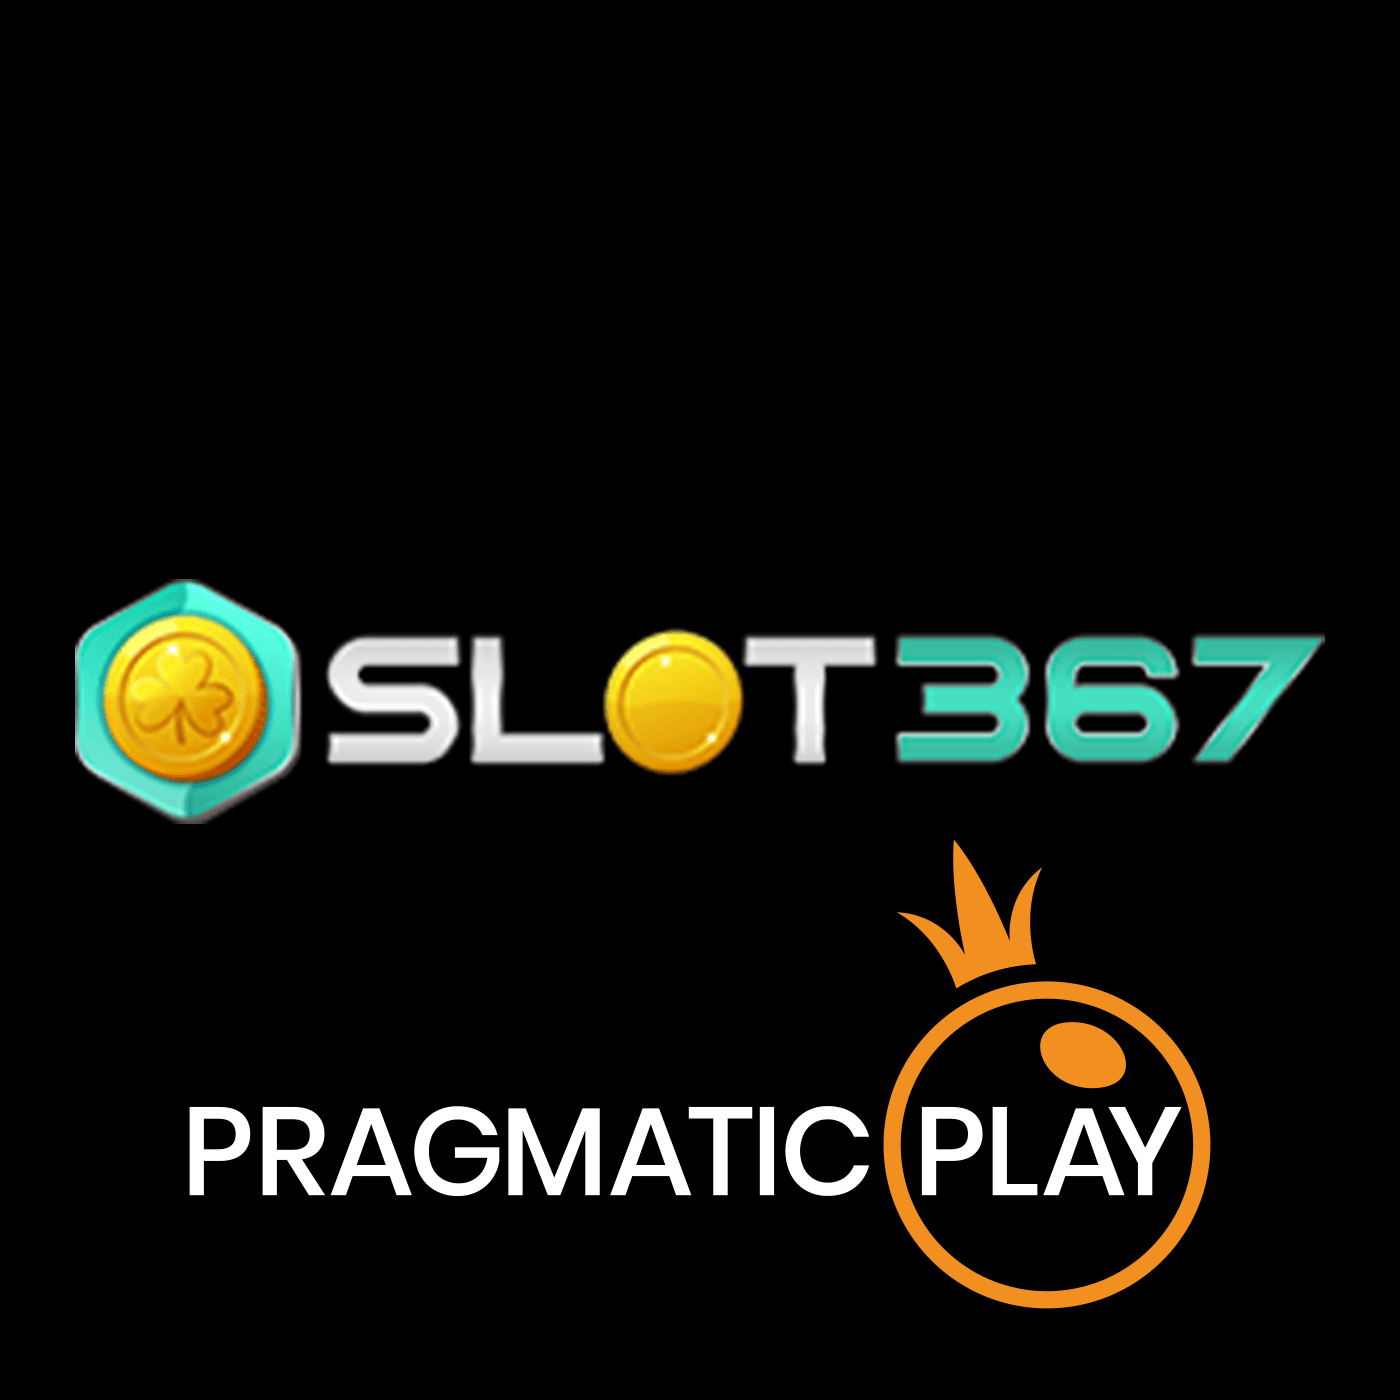 Slot367 バナー